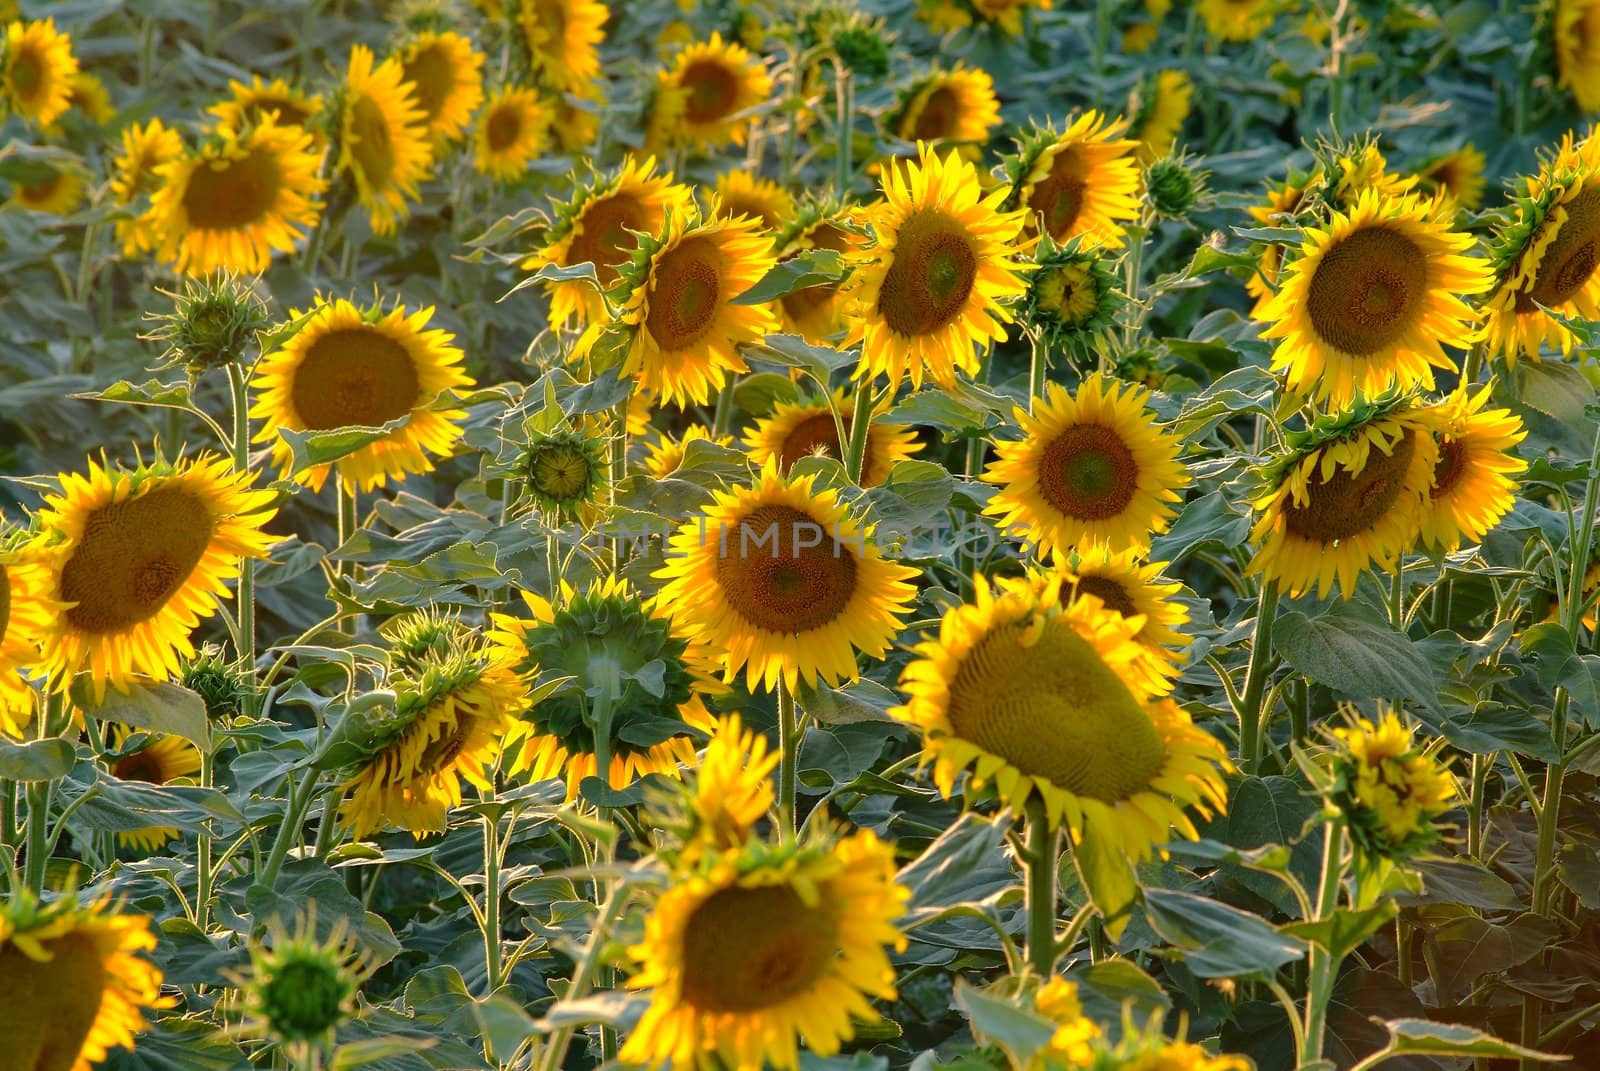 Sonnenblume | sunflowers by fotofritz